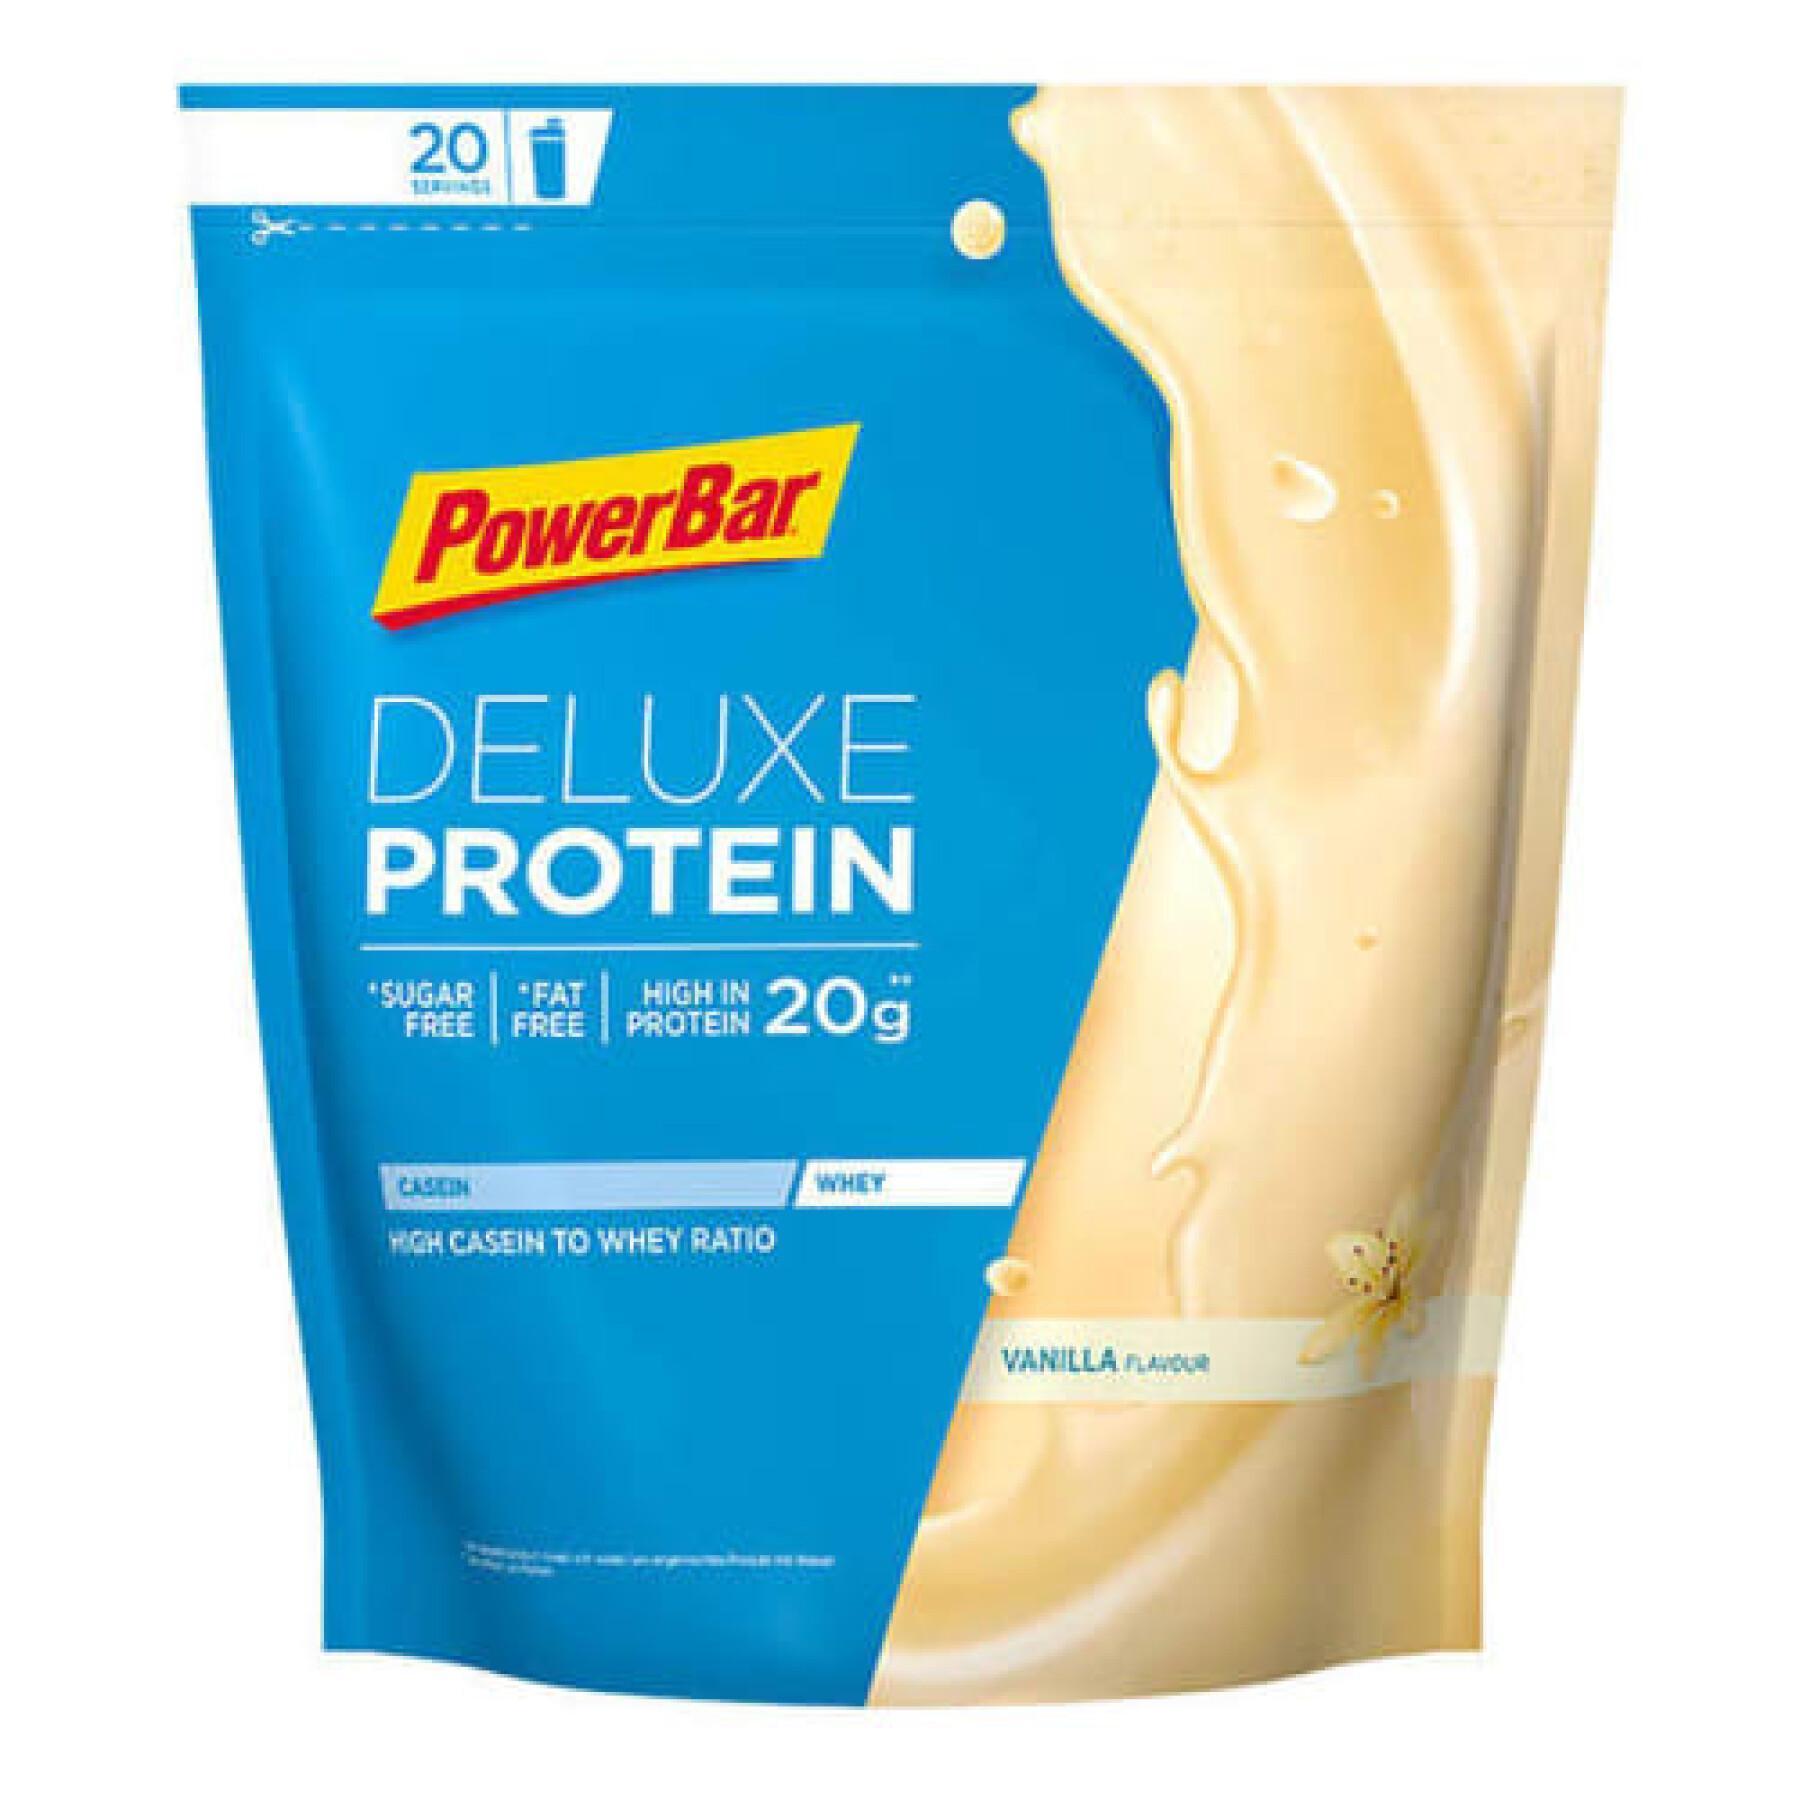 Pó PowerBar ProteinPlus 80 % - Vanilla (500gr)